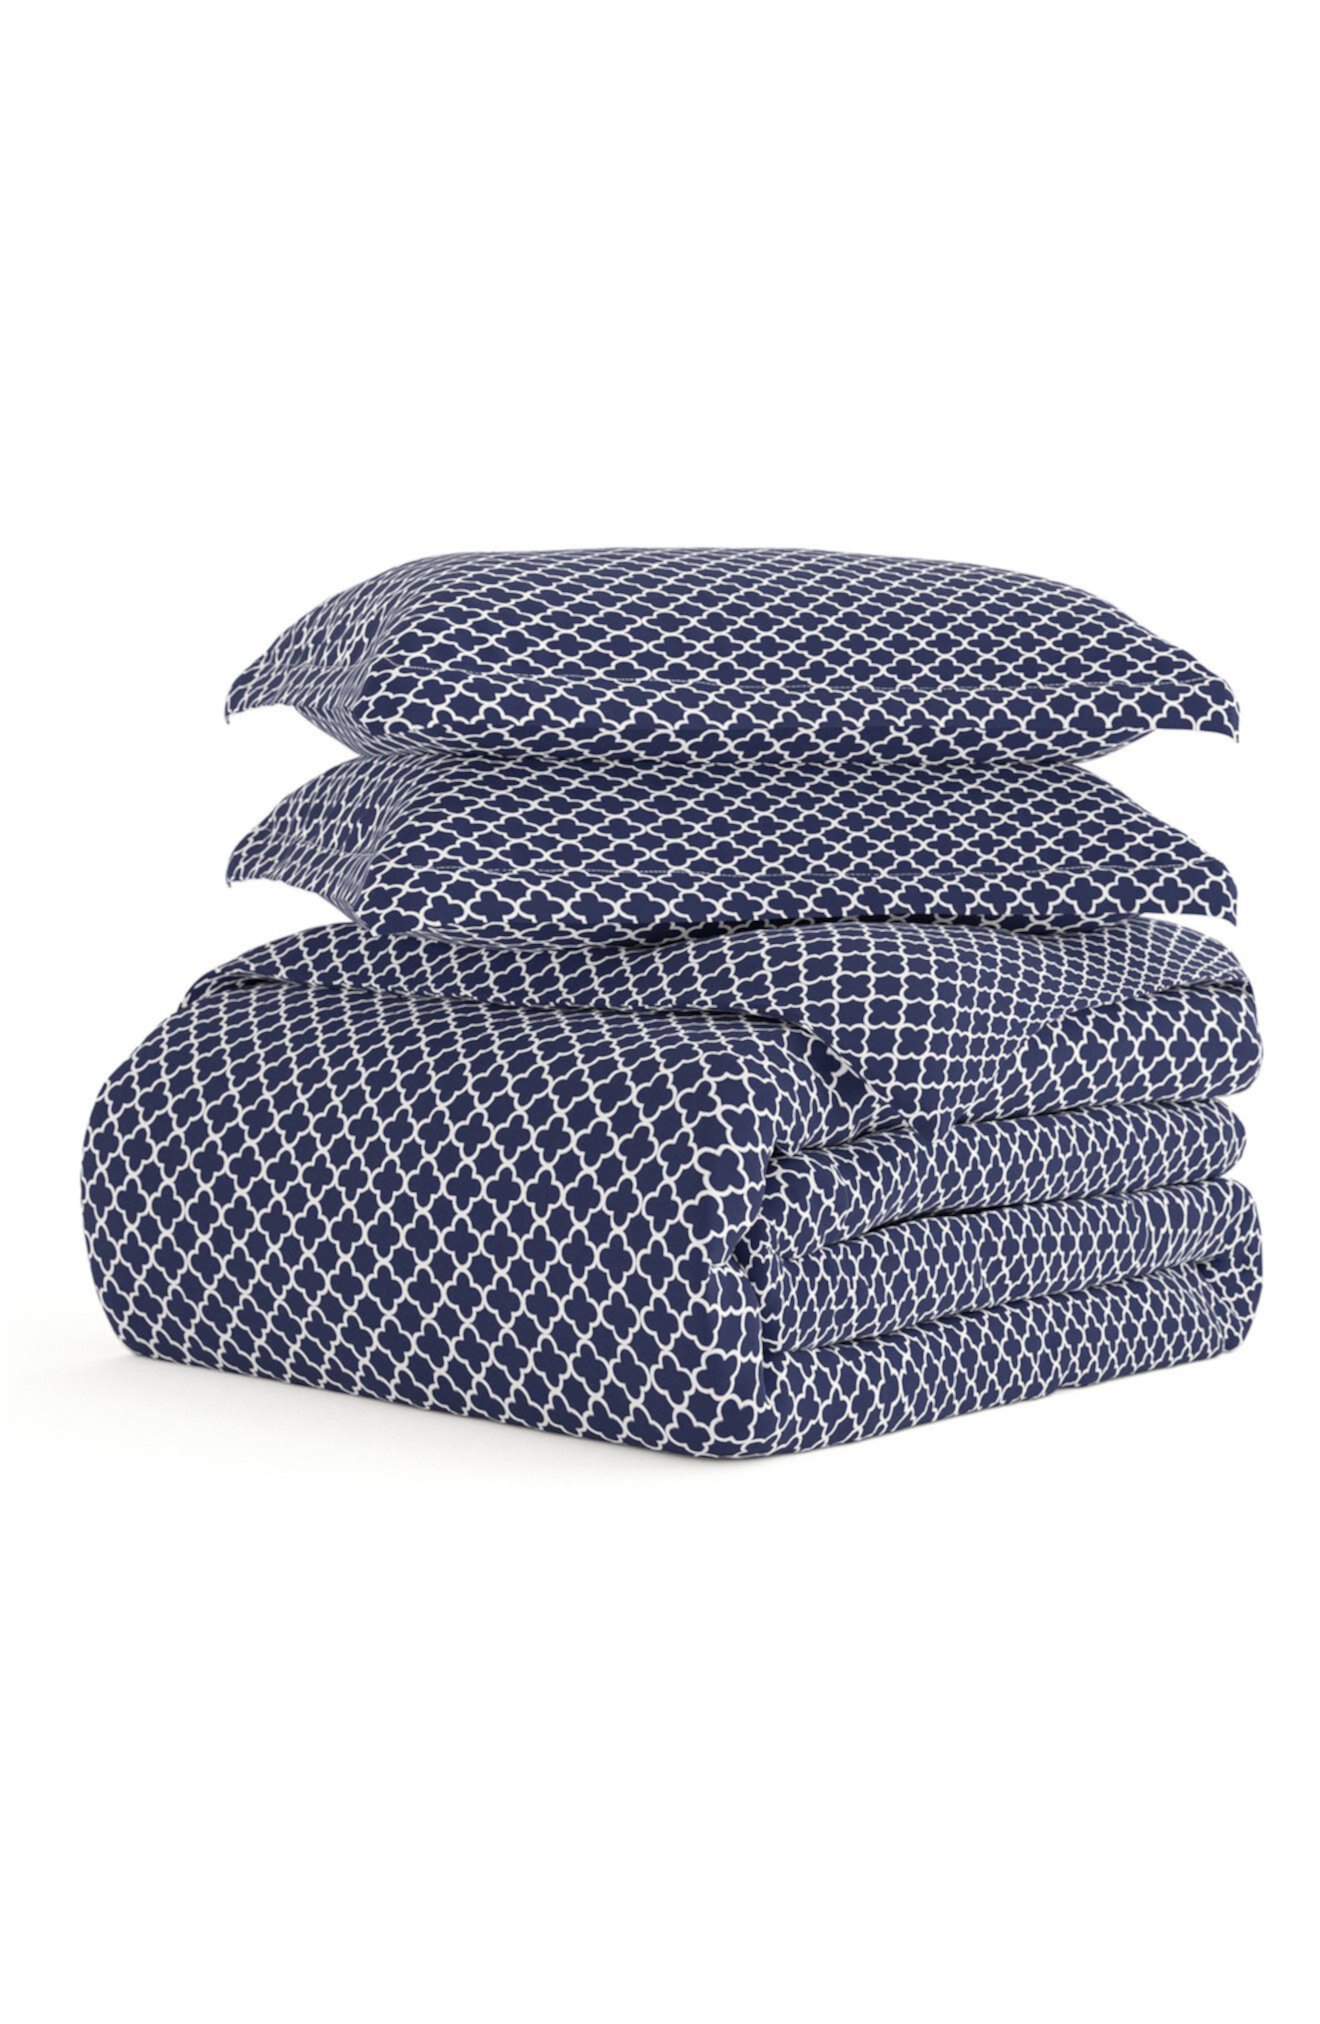 Home Spun Premium Ultra Soft Quadrafoil Pattern 3-Piece Duvet Cover King Set - Темно-синий IENJOY HOME